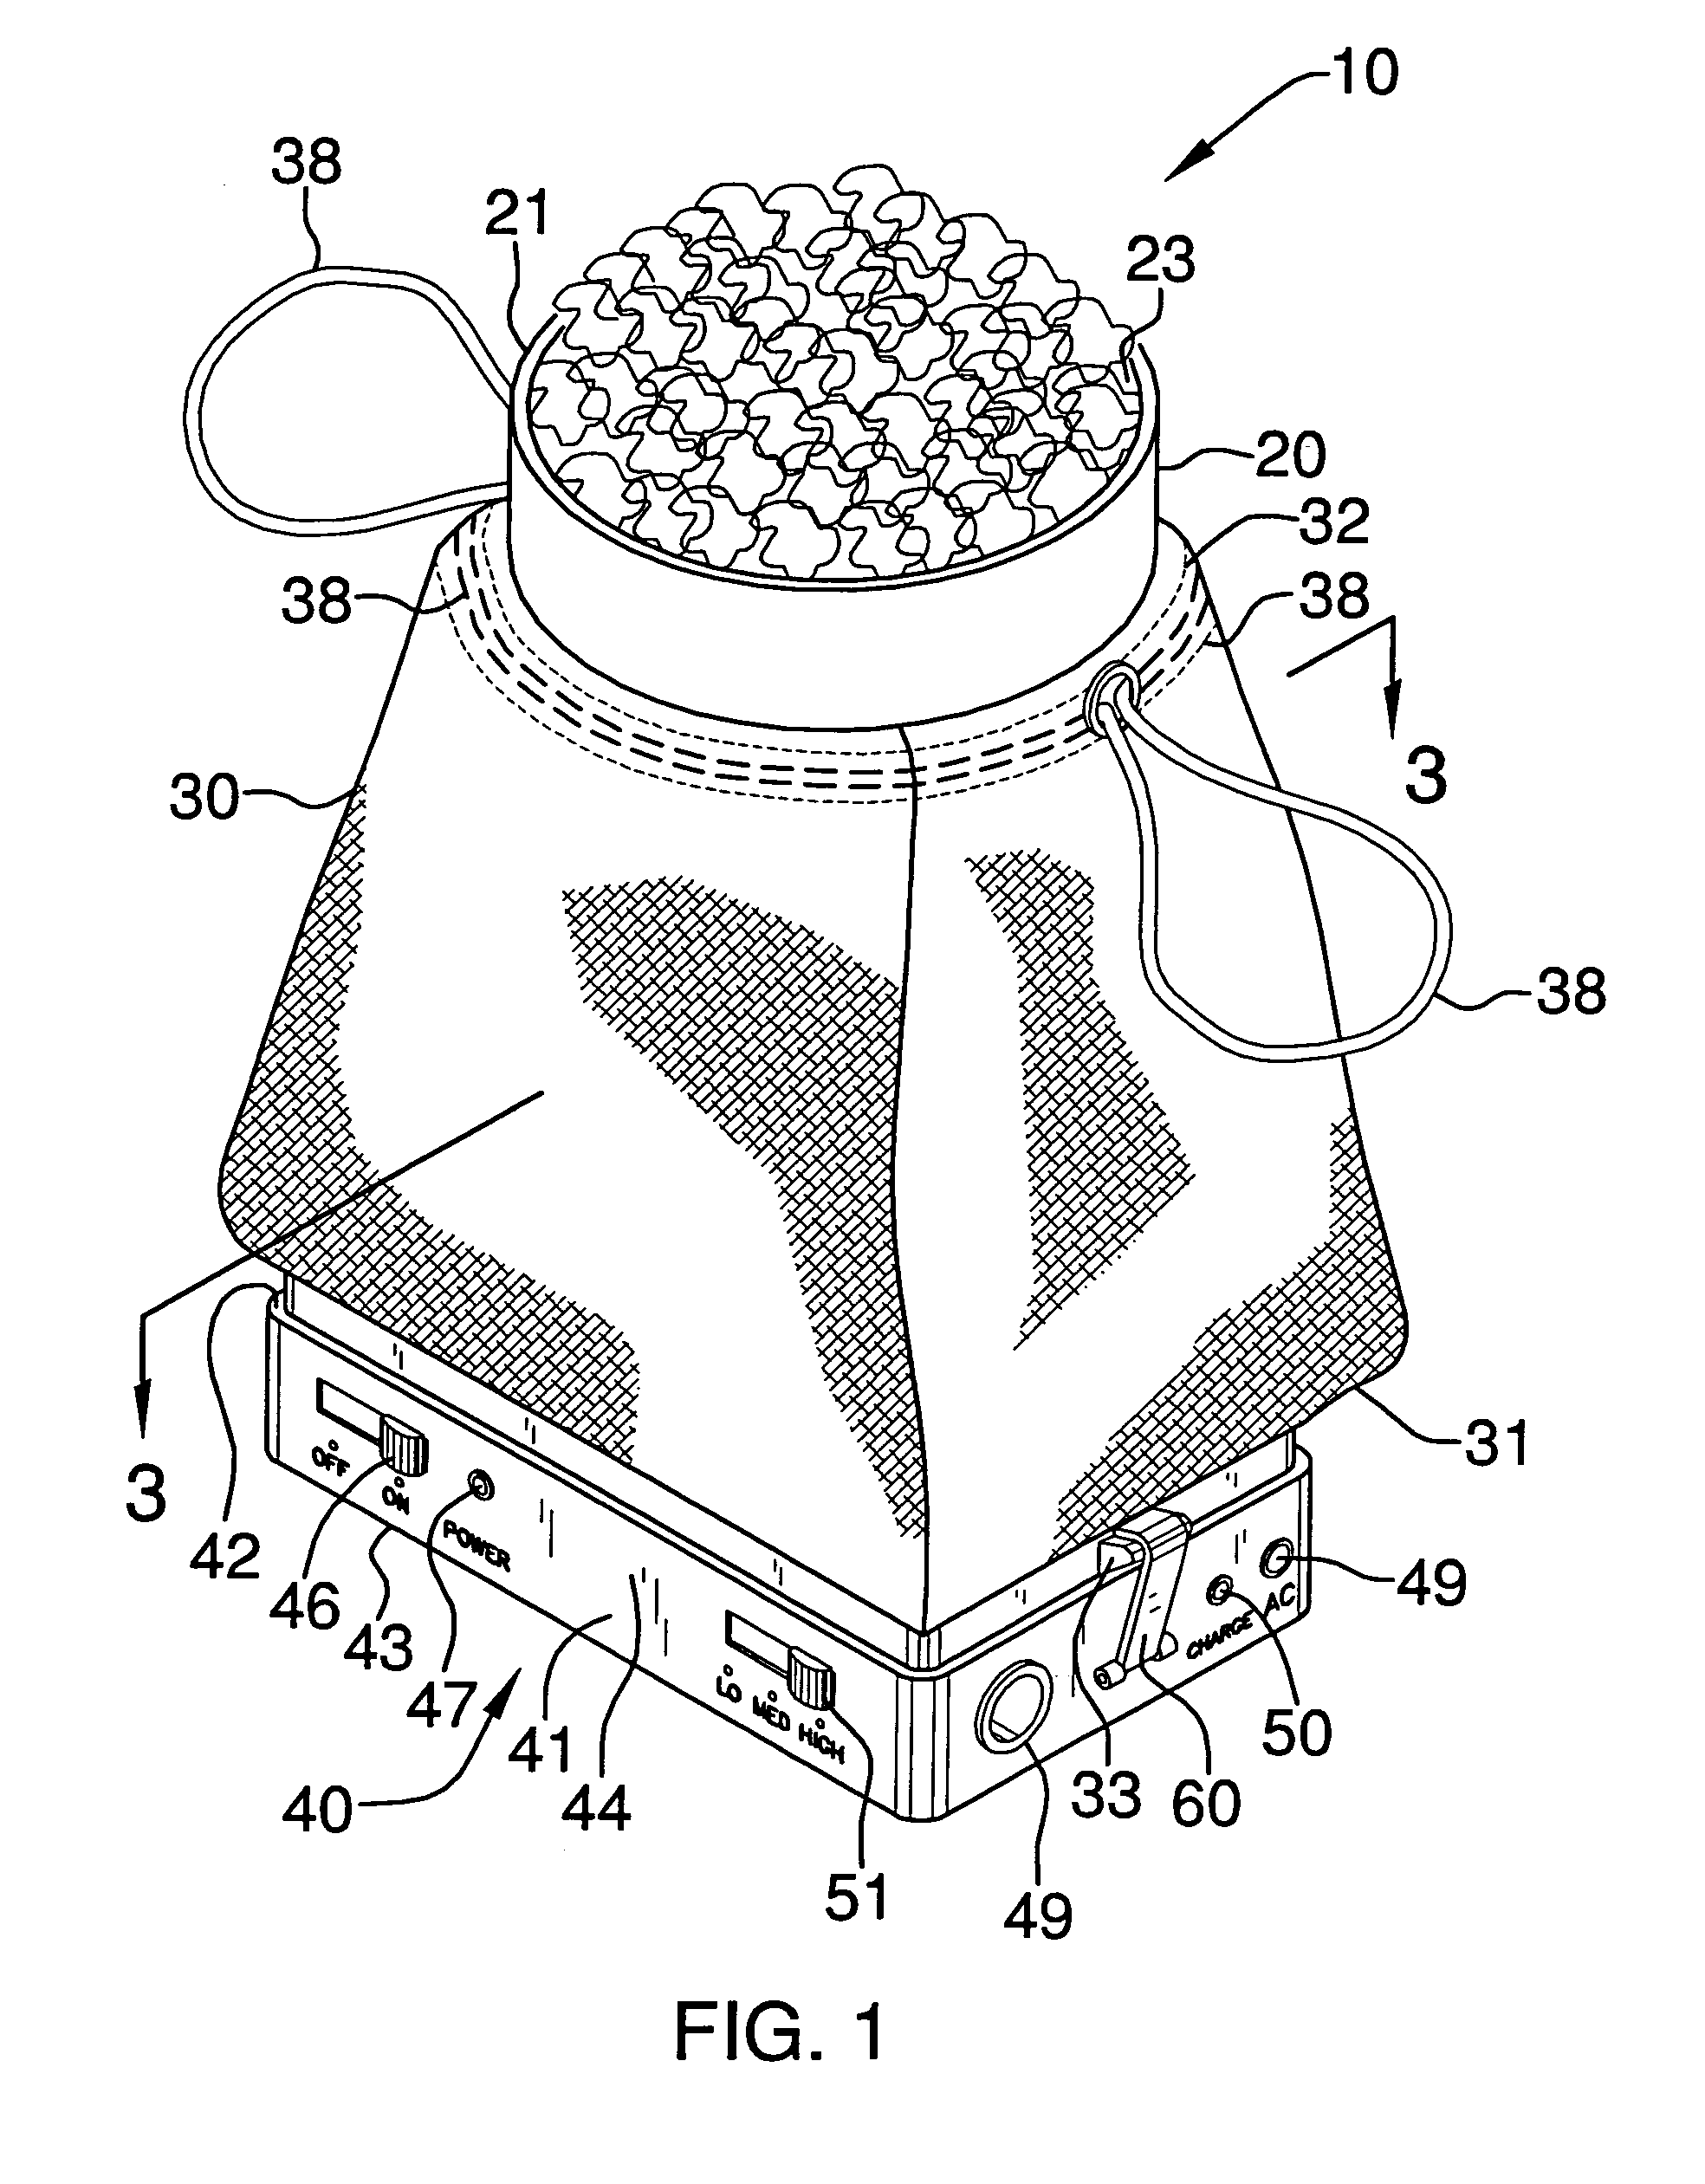 Popcorn heating device